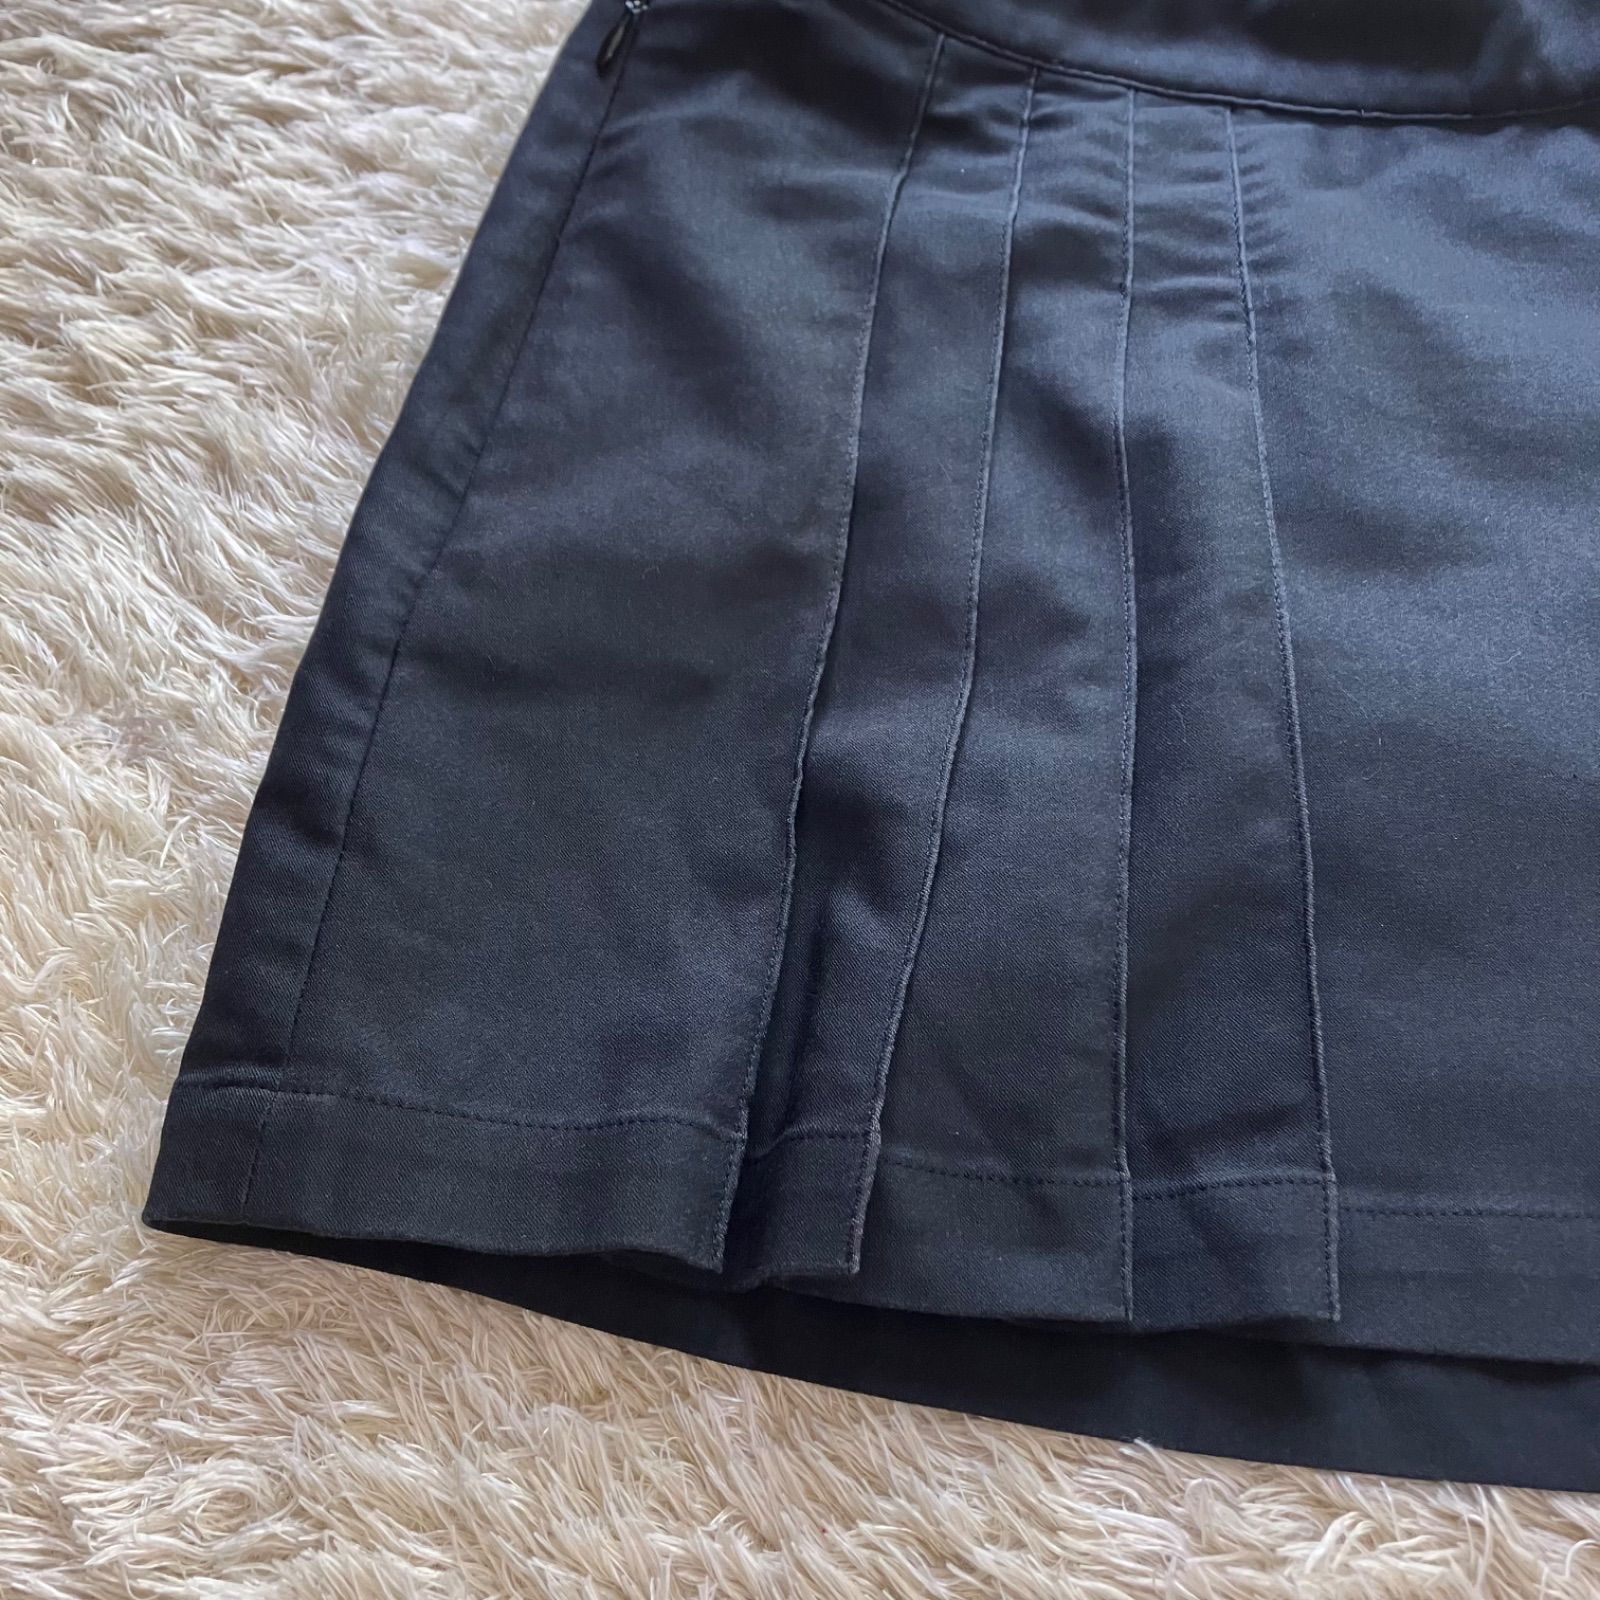 L 黒 ブラック プリーツ ナイキ クラブ ゴルフ スカート